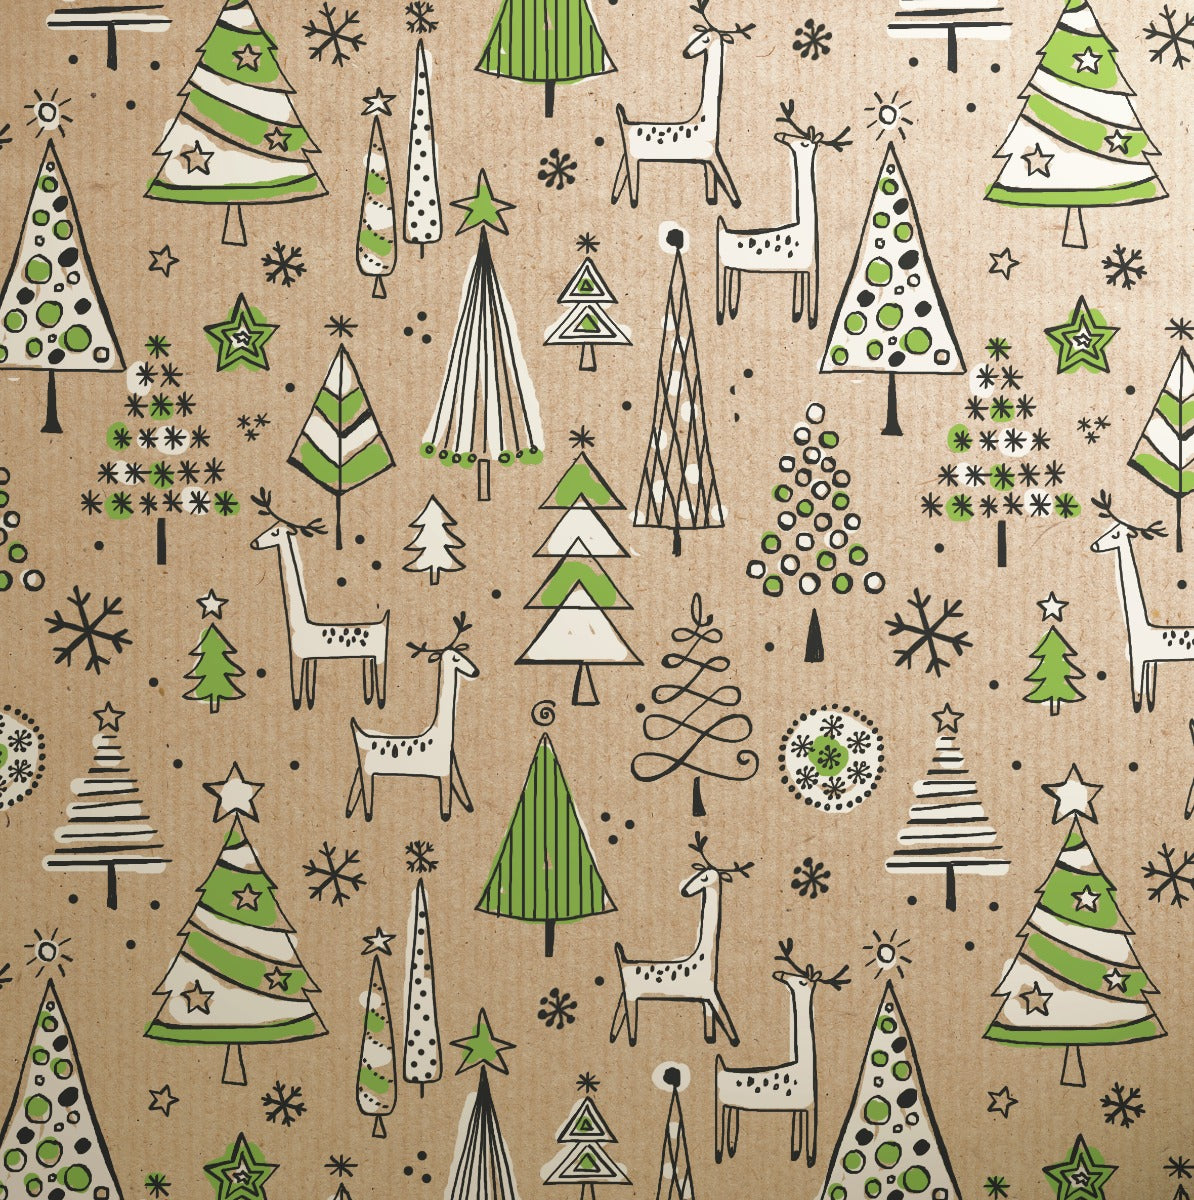 Uniqueco Printed FSCR Doodles Christmas Green Trees